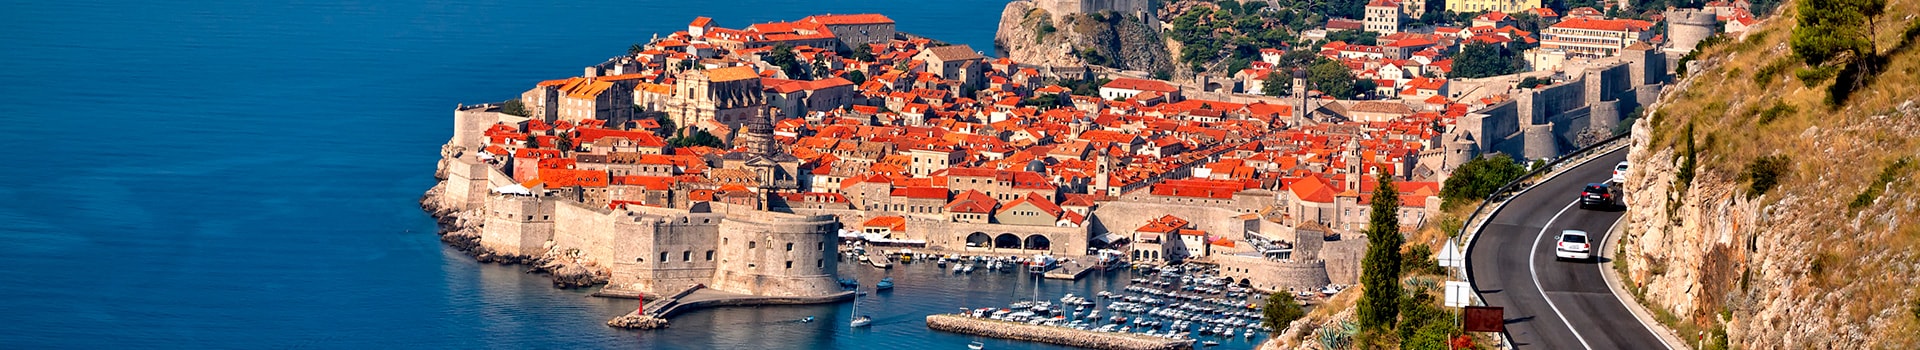 Bordeaux-Merignac - Dubrovnik